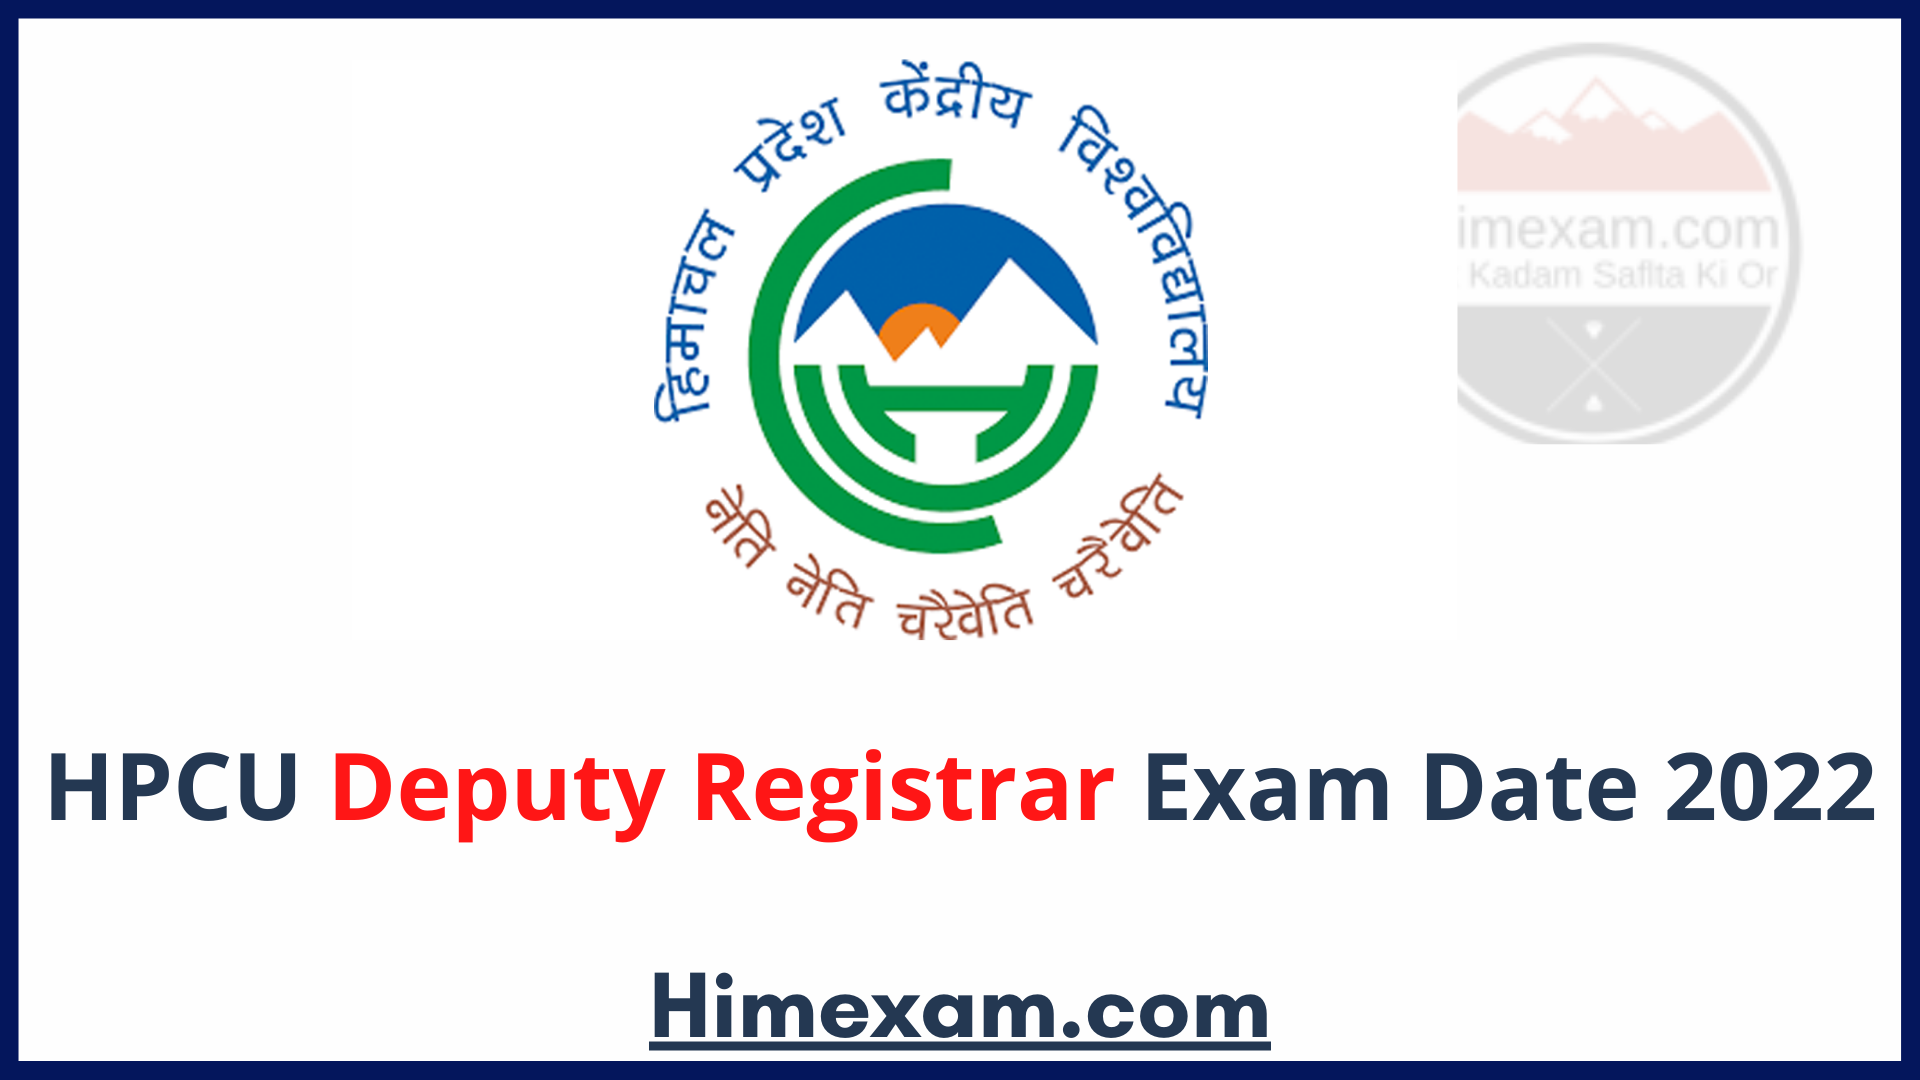 HPCU Deputy Registrar Exam Date 2022